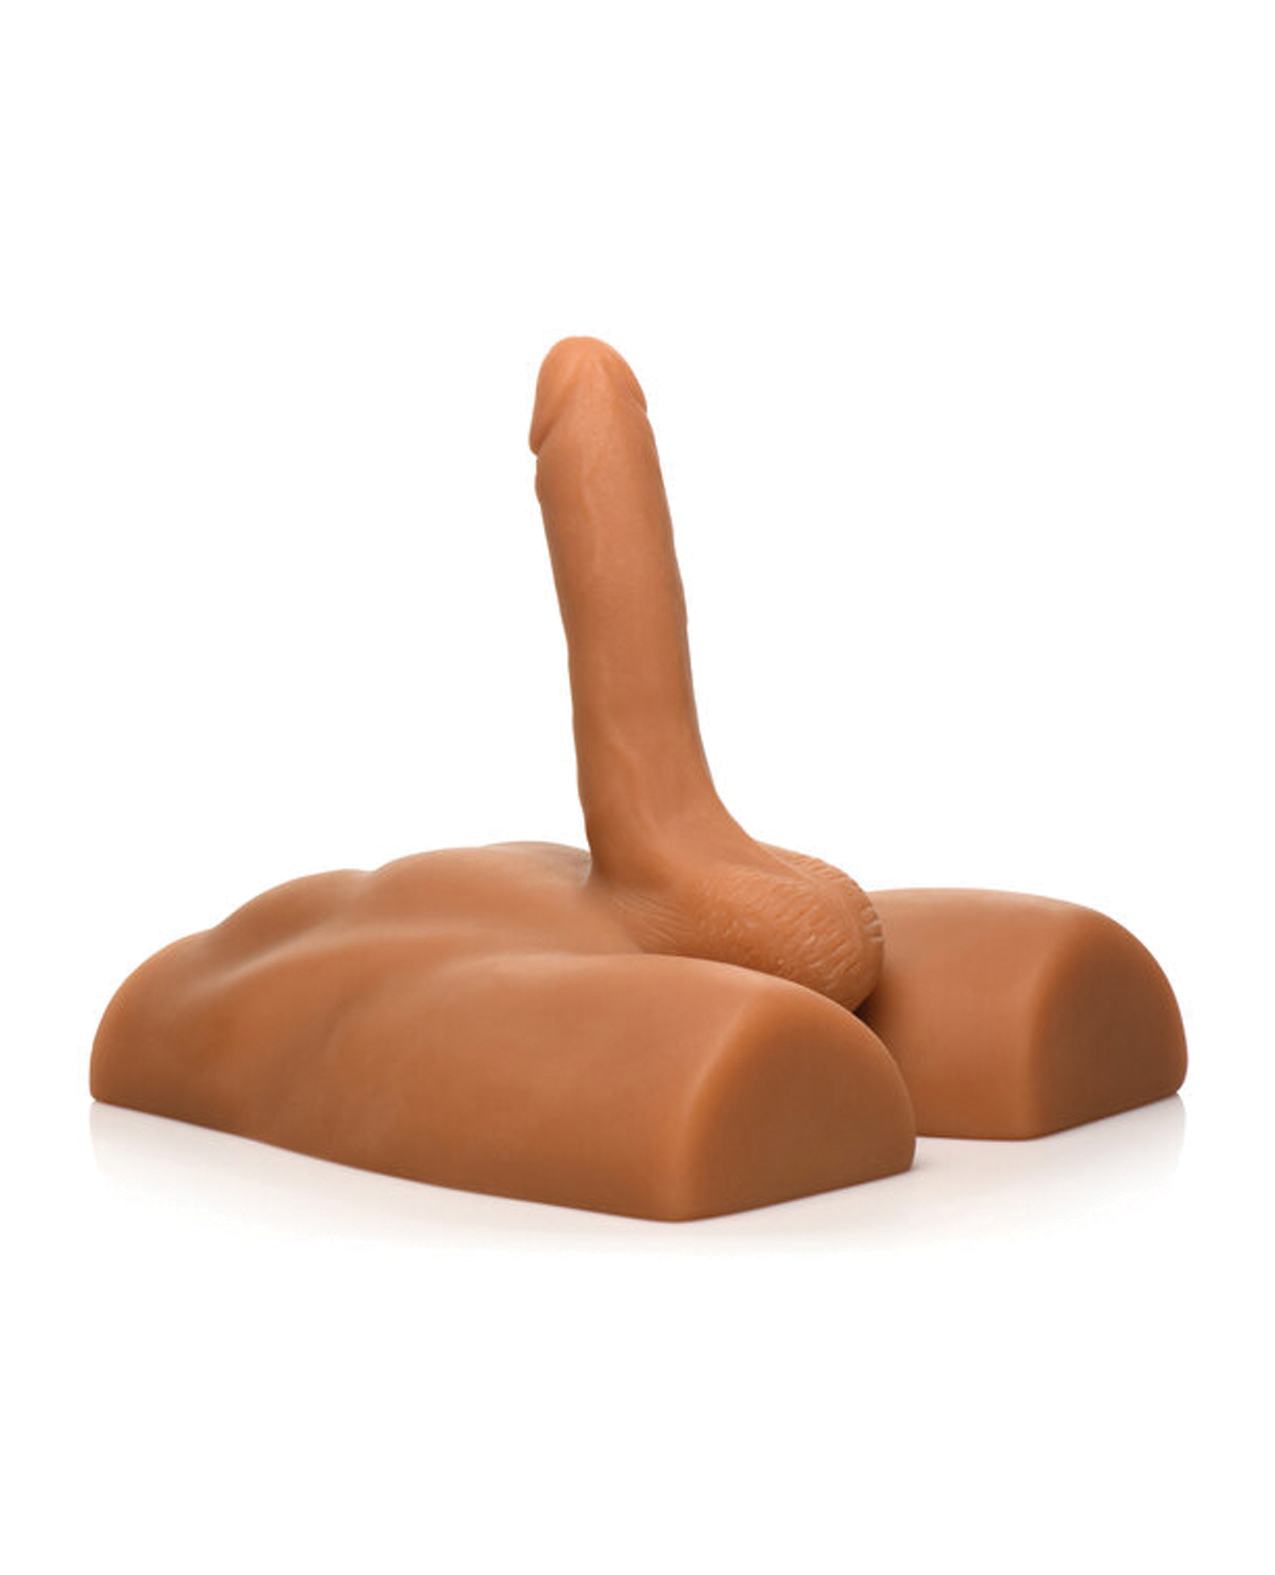 Buy Best Curve Toys Jock Ass Masturbator w/Poseable Dildo